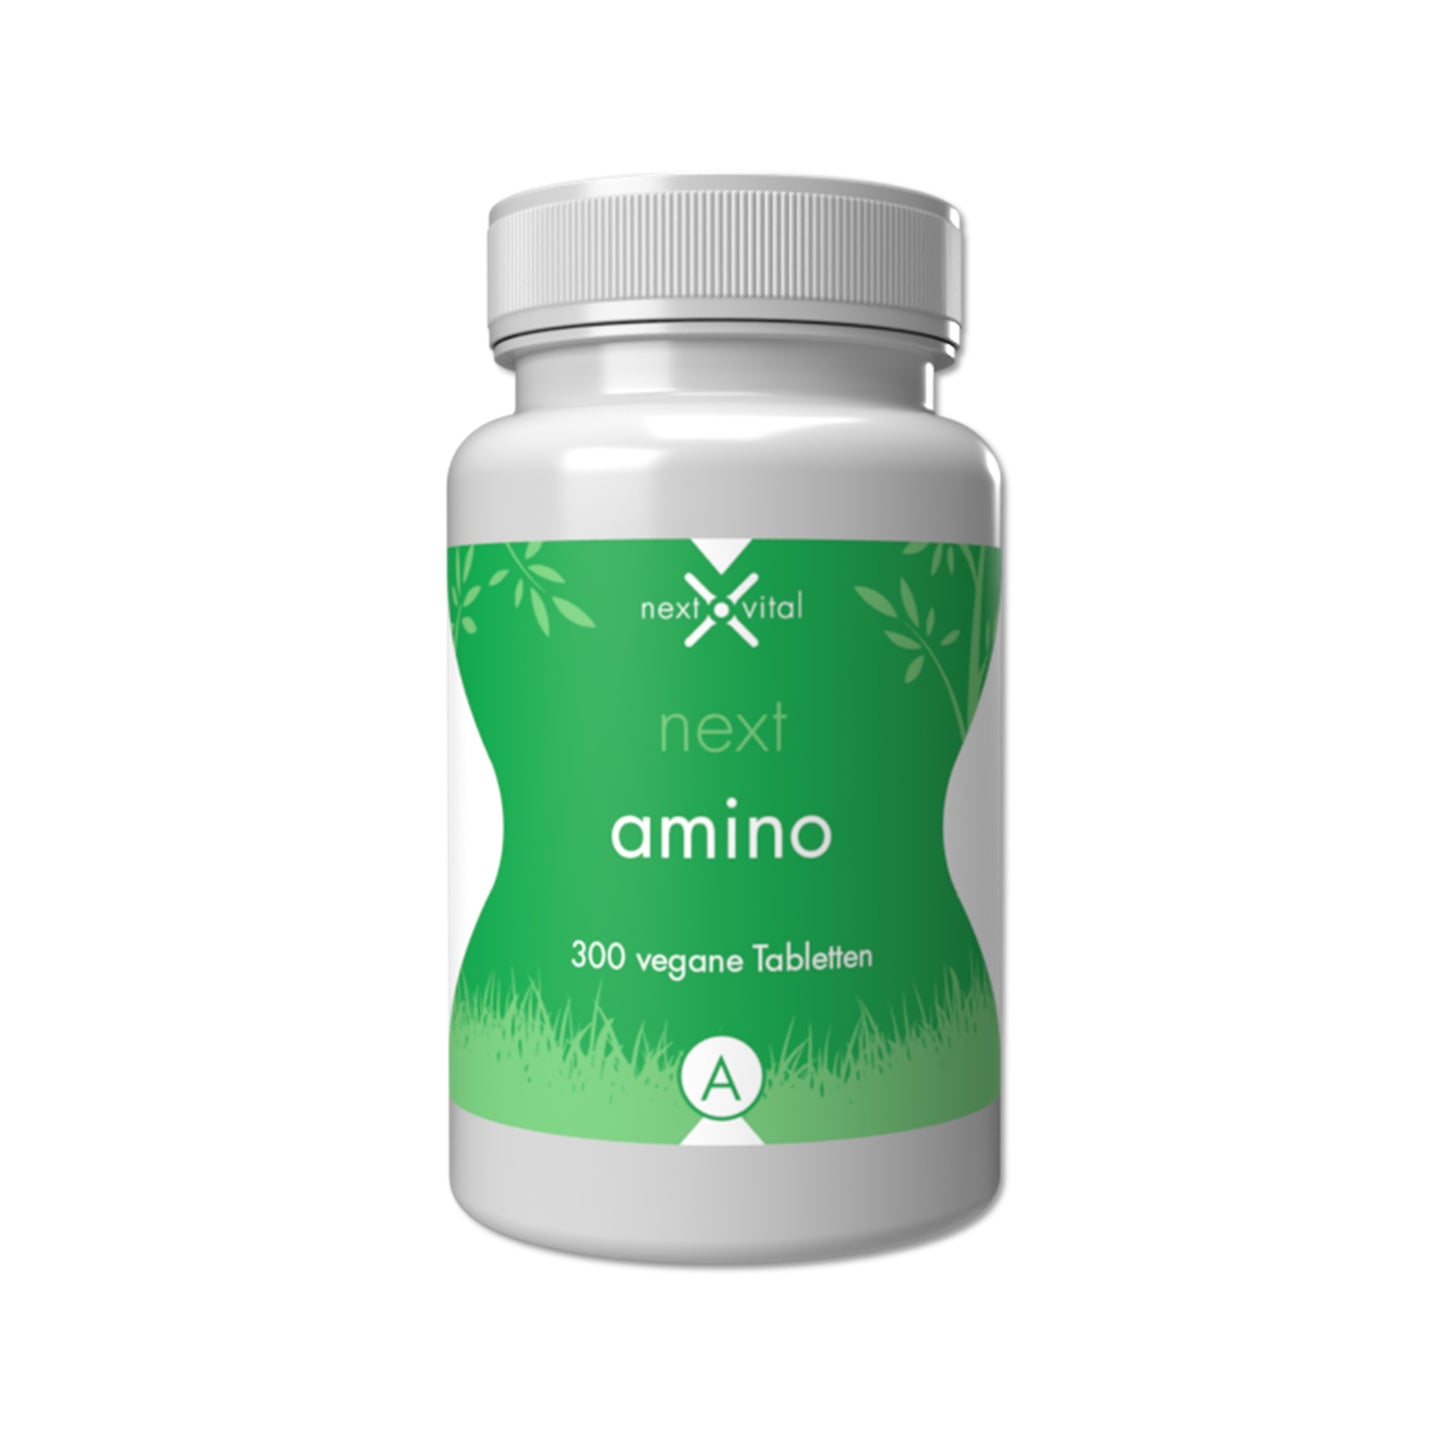 next amino, 300 vegane Tabletten